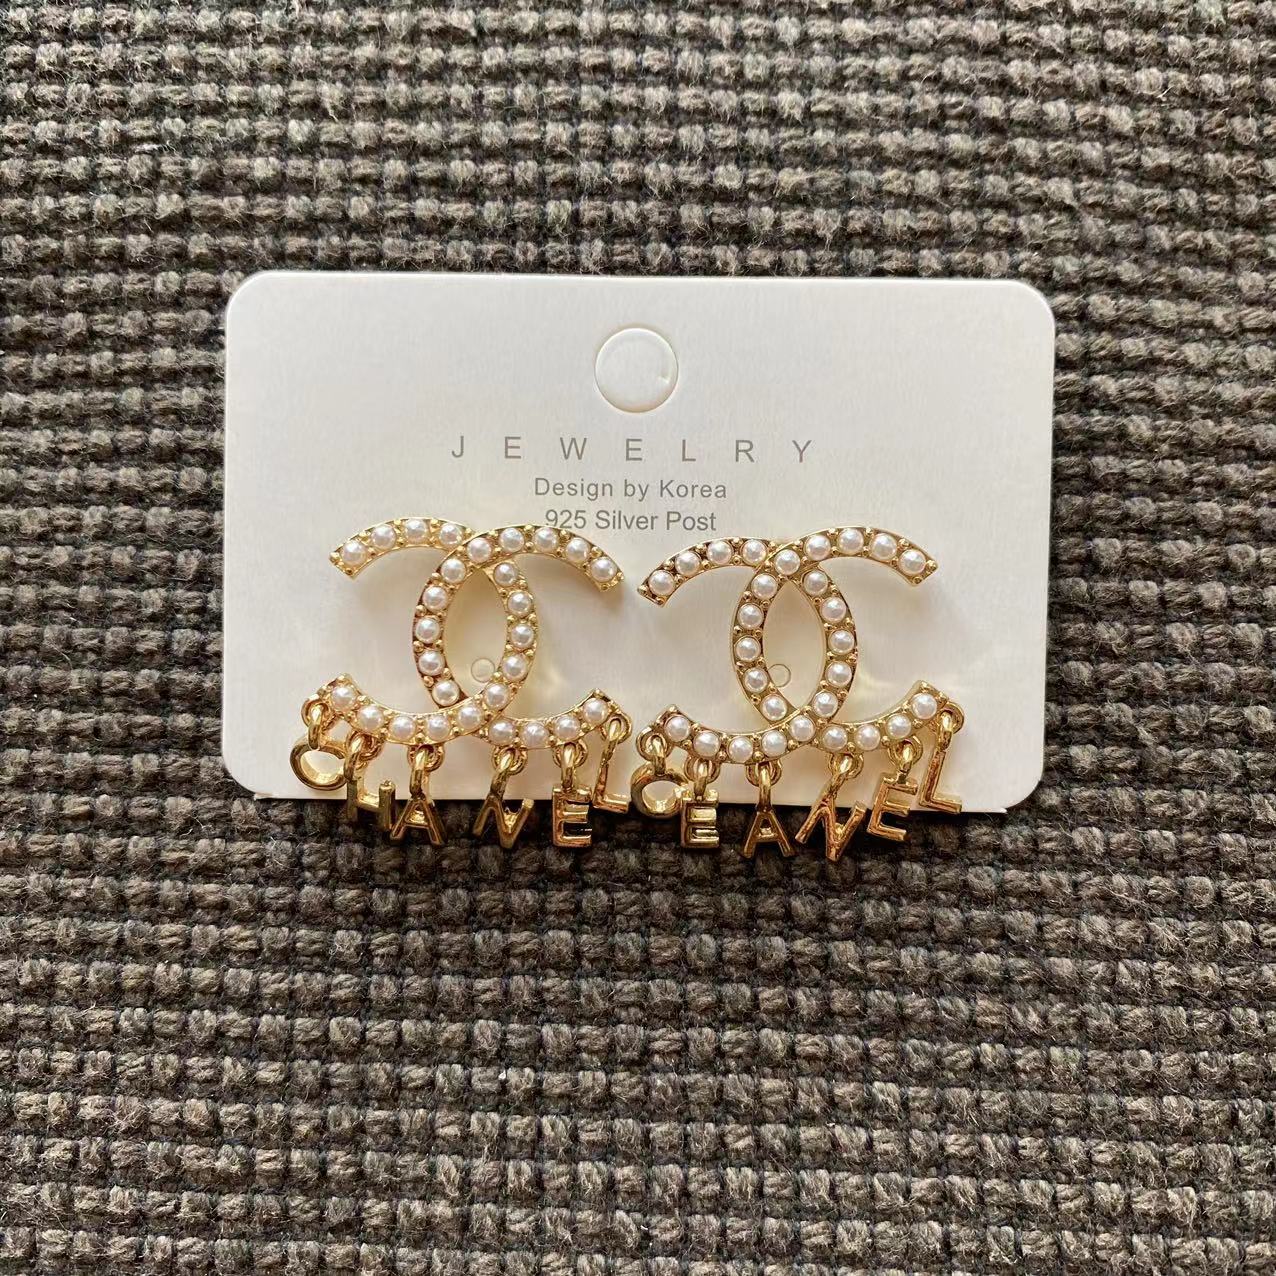 Big sale! New Chanel pearls earrings